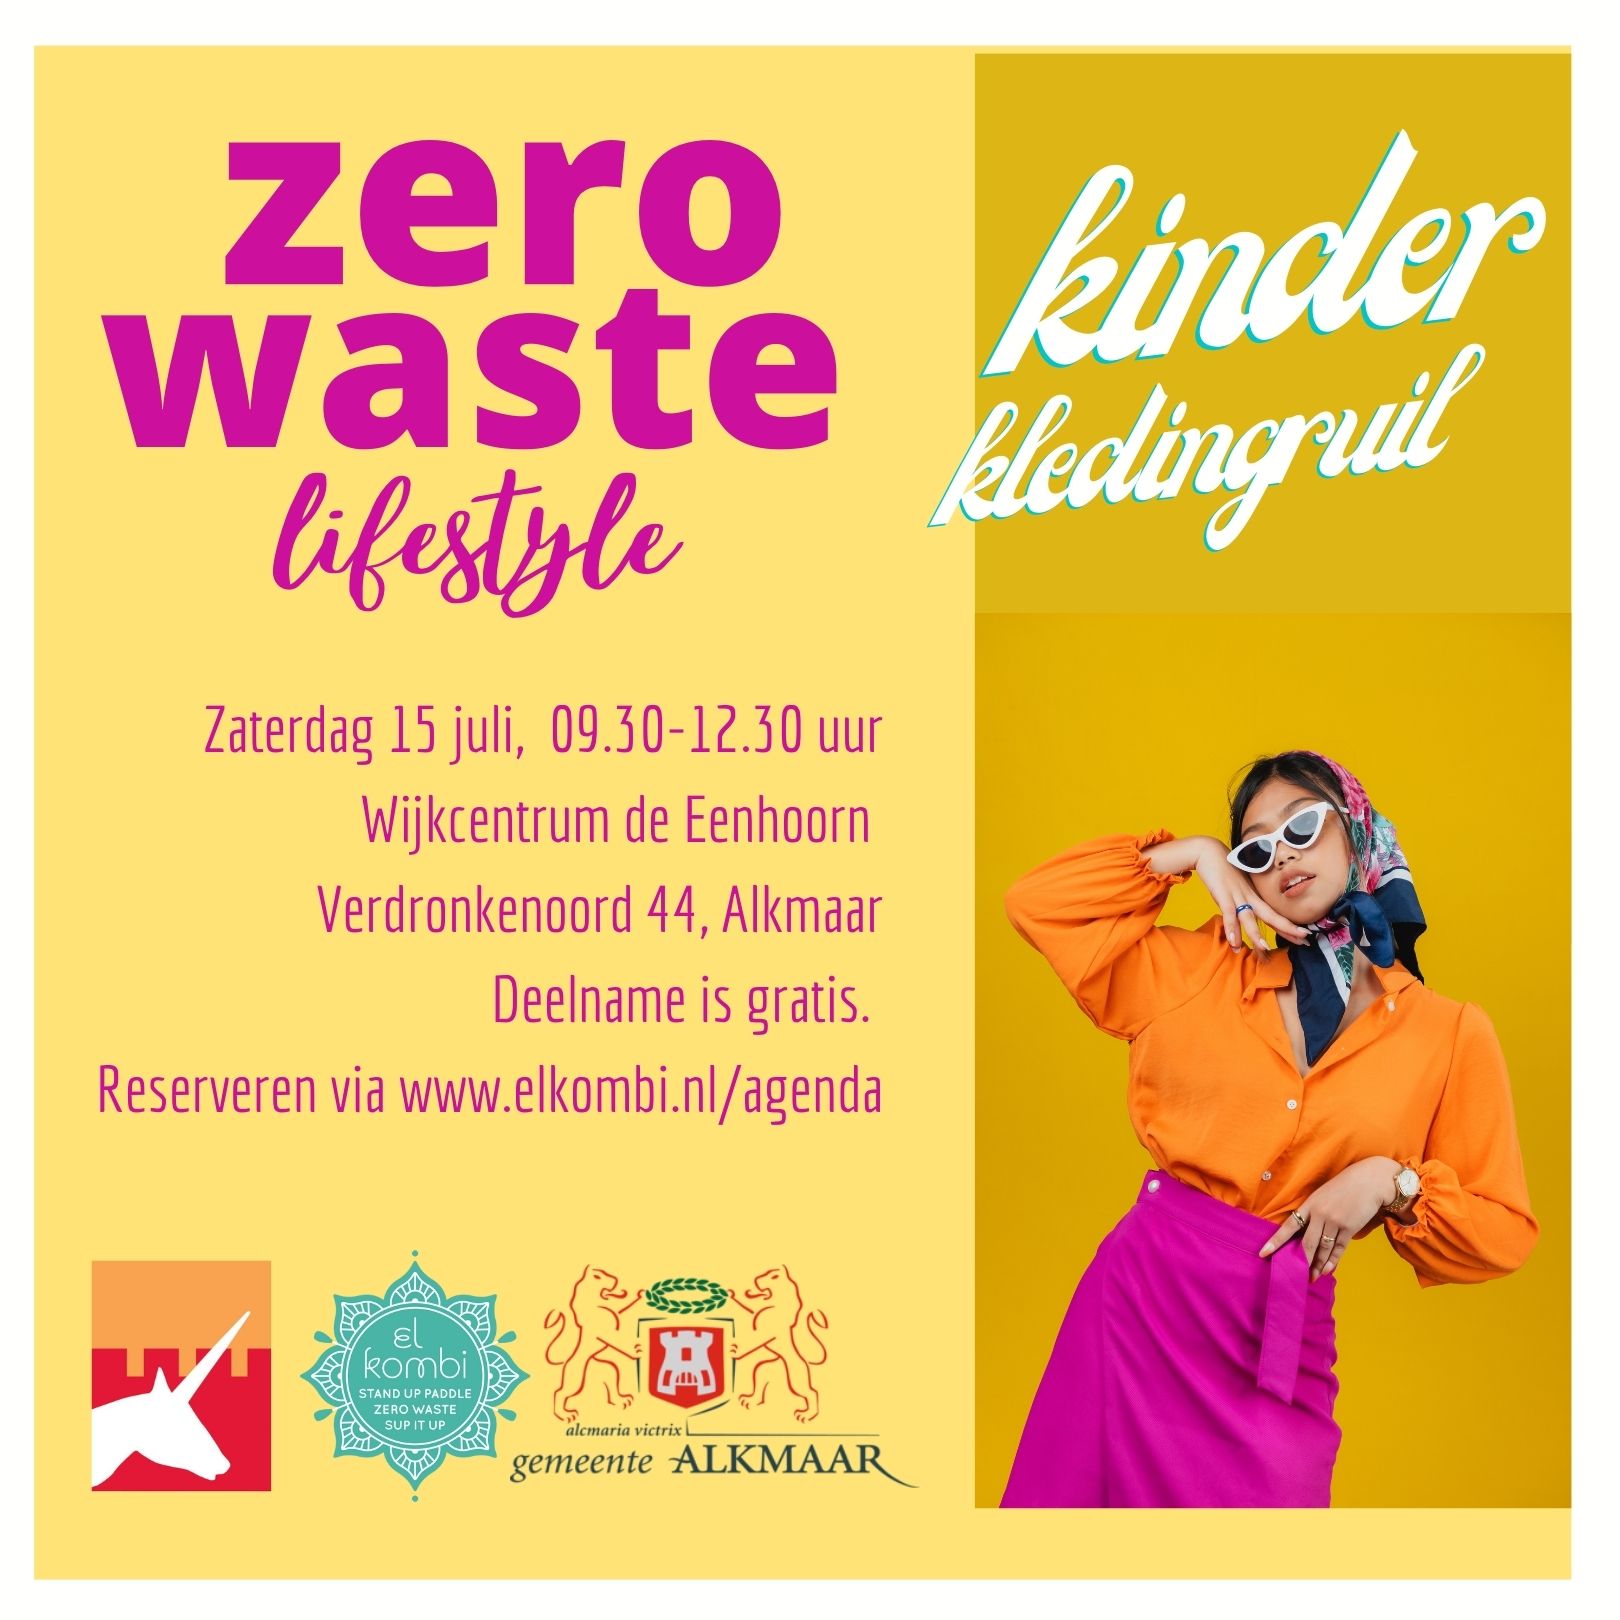 Zero Waste Lifestyle Alkmaar 20230715 kinderkledingruil IG